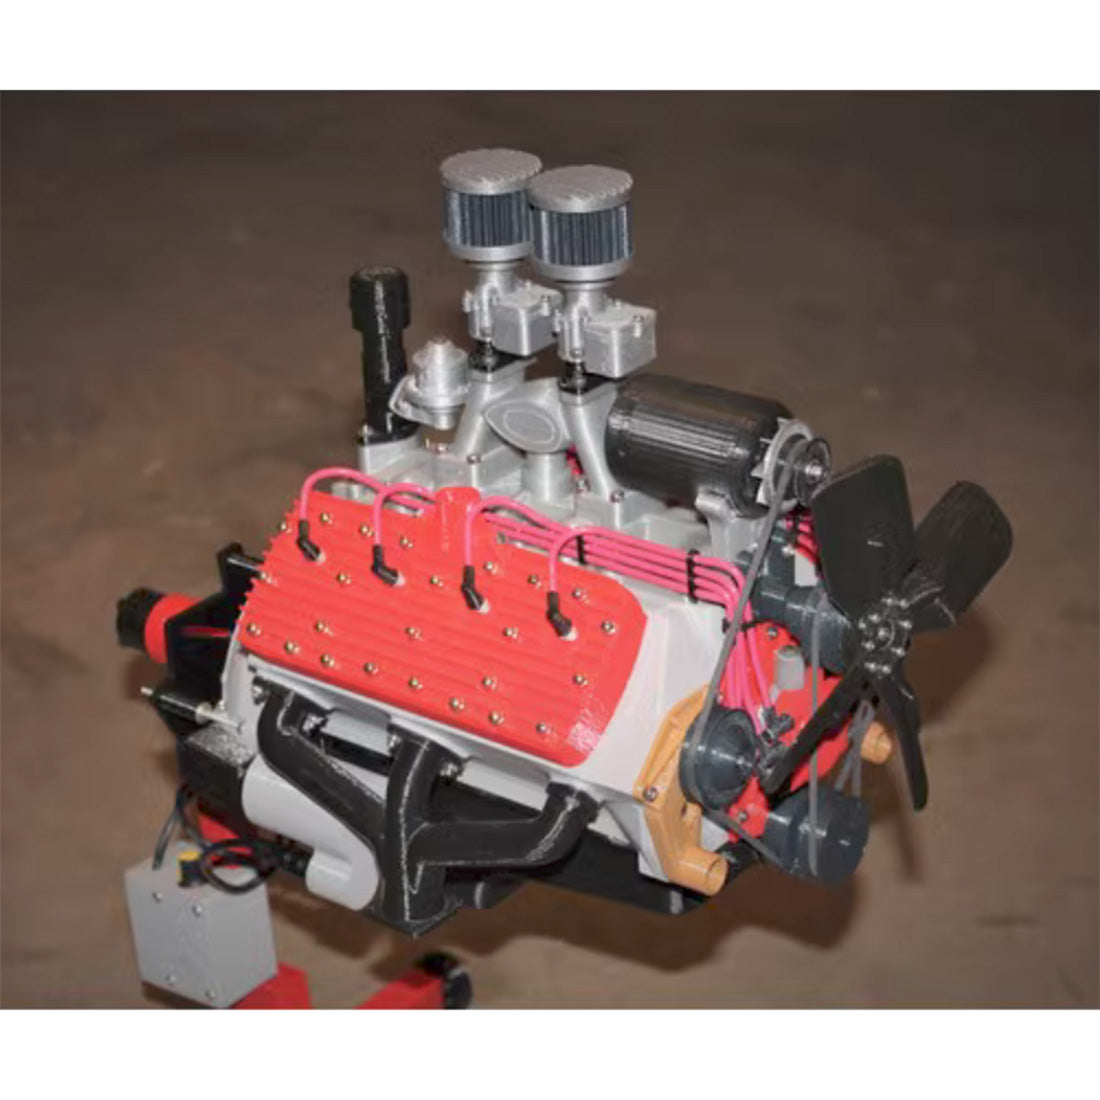 MY MODEL 1/4 Scale Flathead V8 Engine Functional & Detachable FDM 3D Printed Engine Model Toy (Assembled Version) enginediyshop